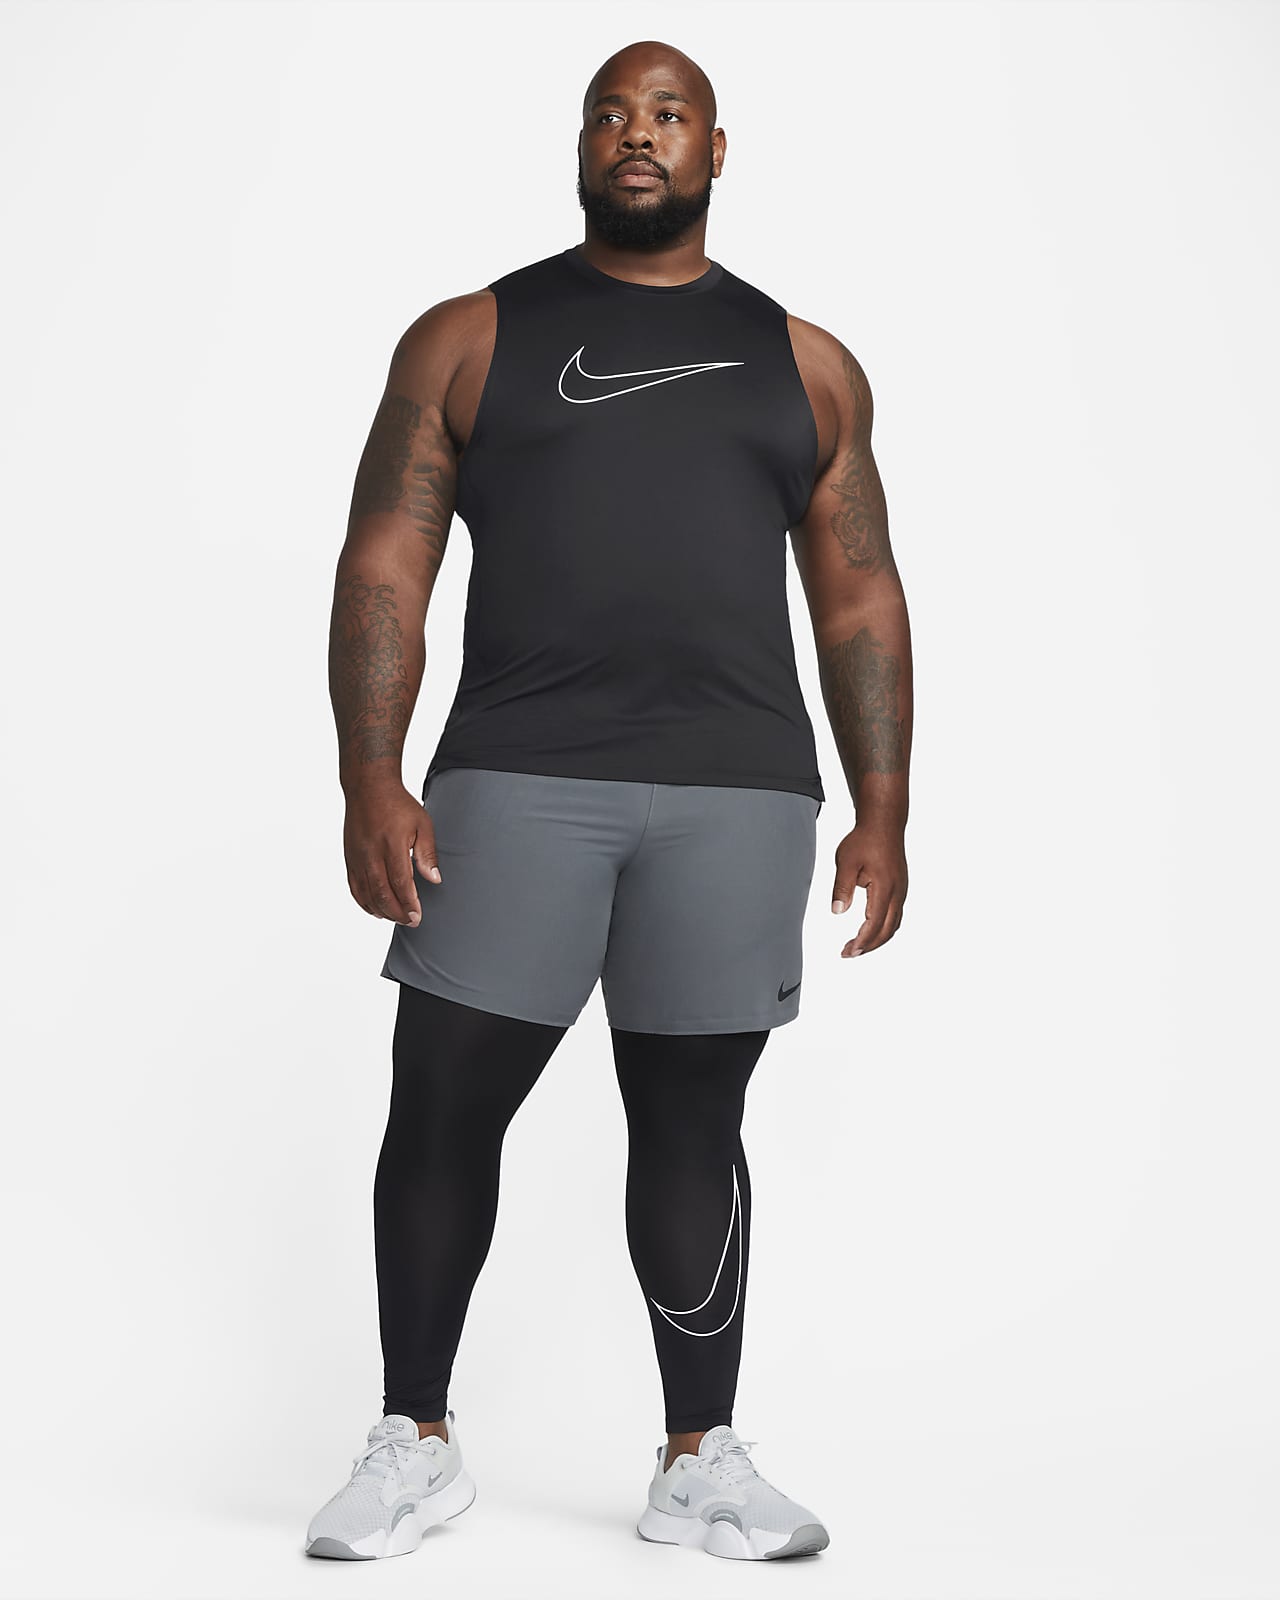 Camiseta sinmangas y ajuste slim hombre Nike Dri-FIT.